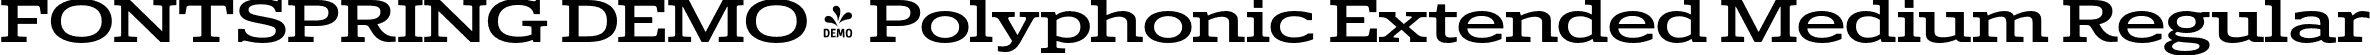 FONTSPRING DEMO - Polyphonic Extended Medium Regular font | Fontspring-DEMO-polyphonic-extendedmedium.otf